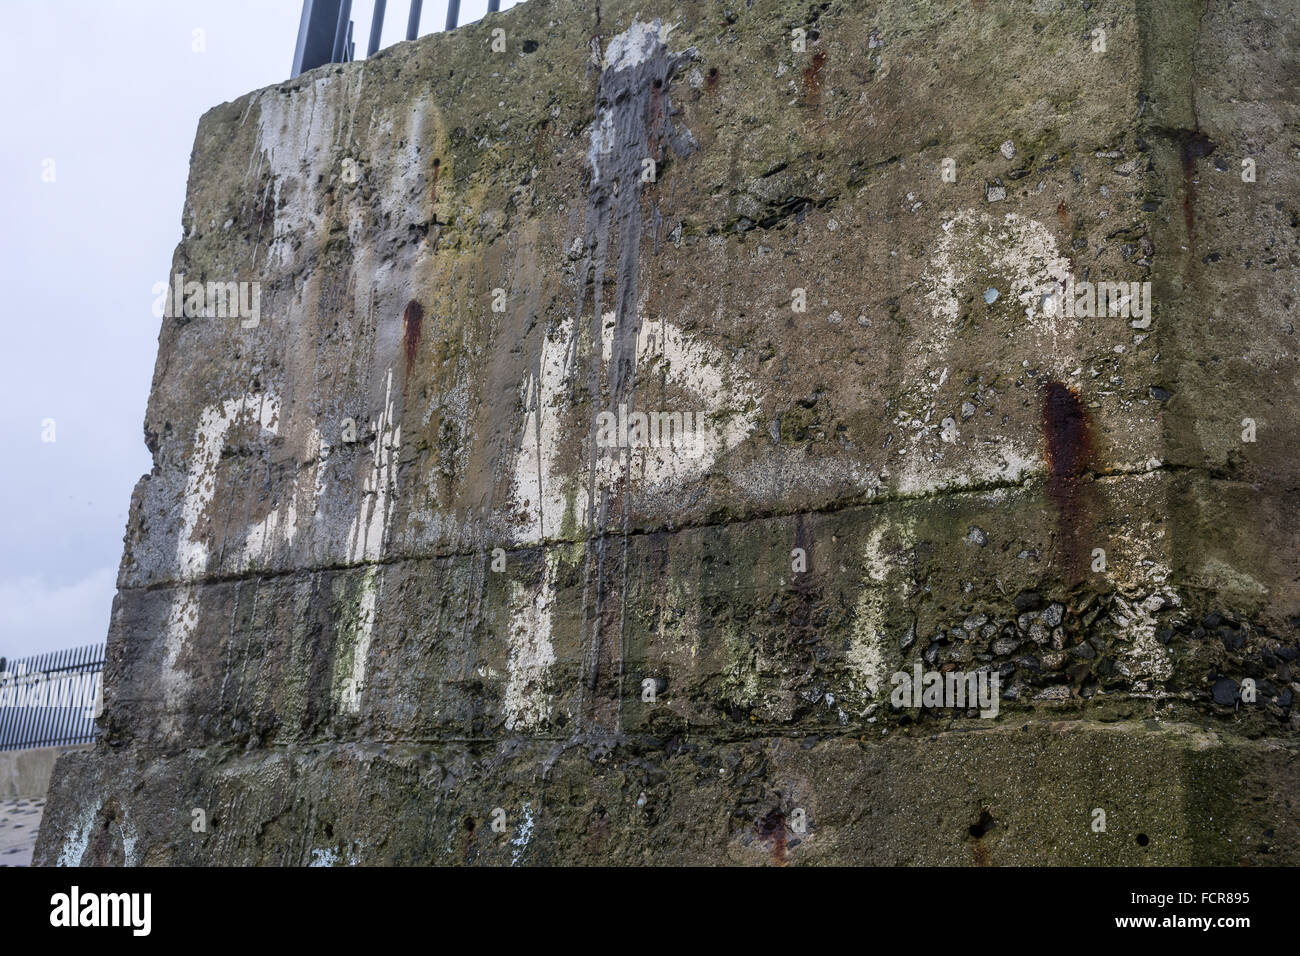 Old faded PIRA graffiti near Newcastle, County Down in Ireland Stock Photo